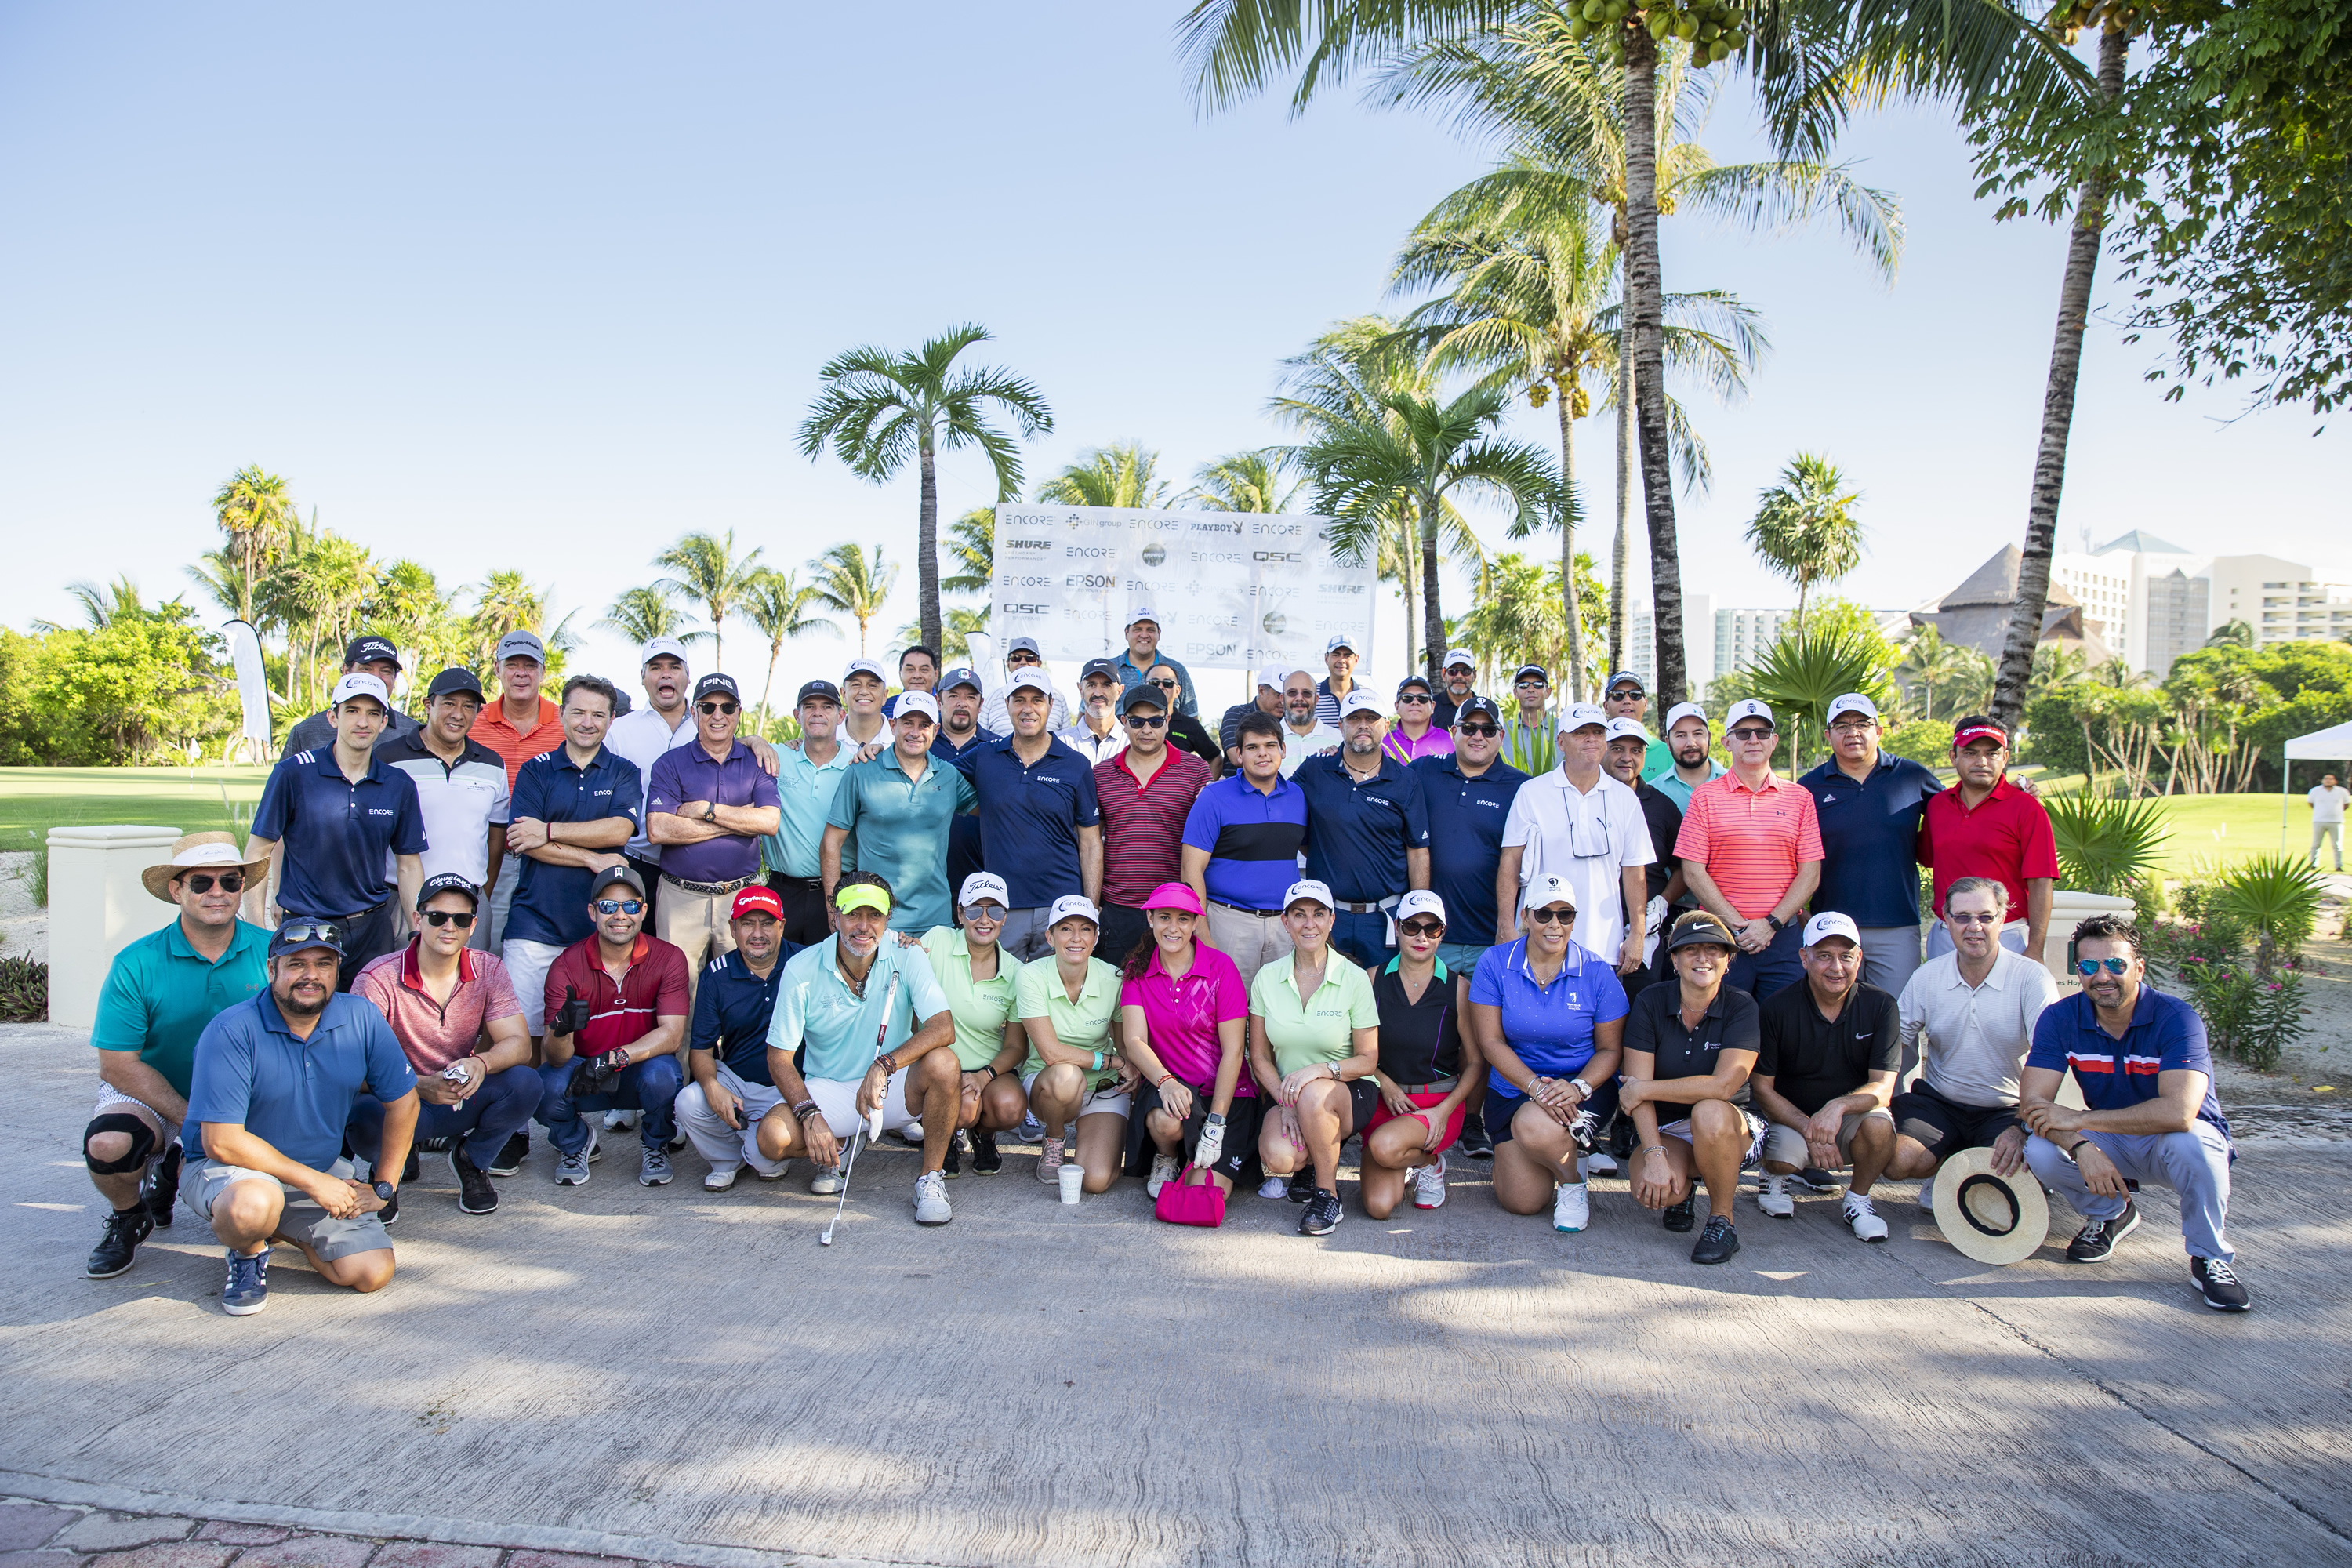 Torneo de golf “Encore & Friends Invitational” 2019